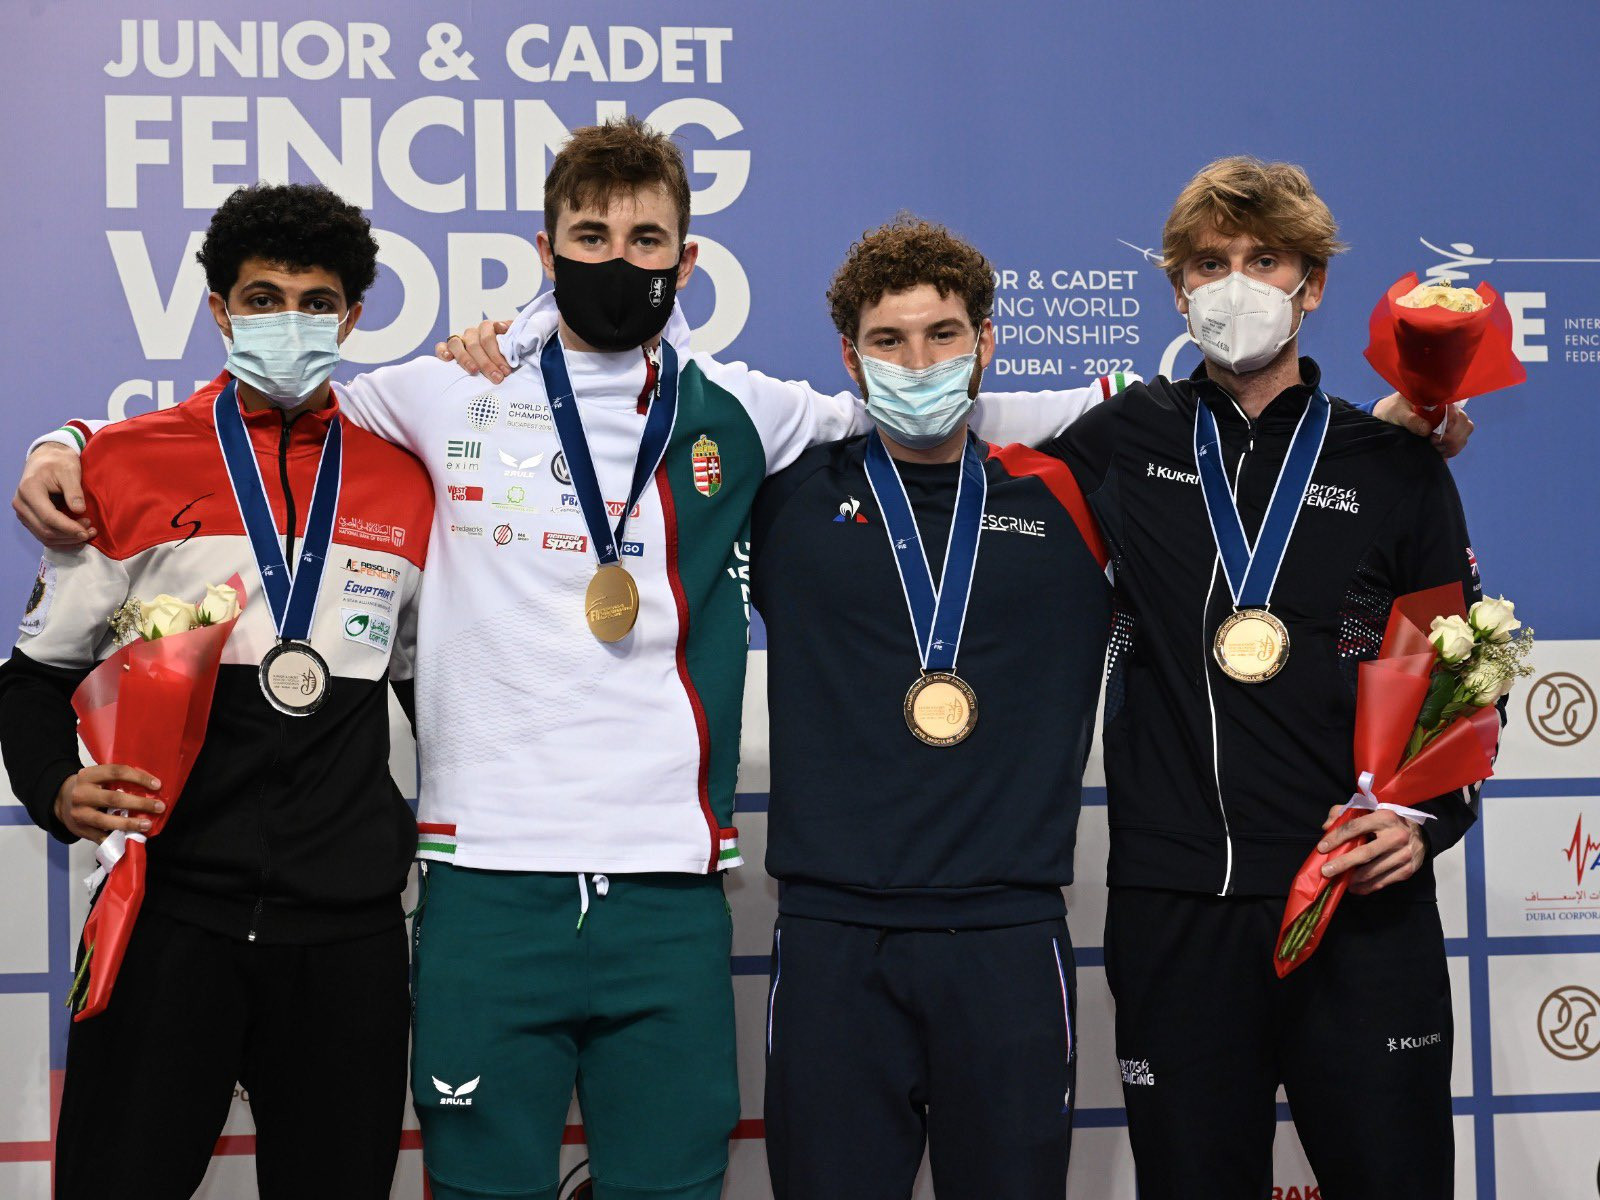 Zsombor Keszthelyi won the men's individual junior épée at the  Junior and Cadet Fencing World Championships ©FIE